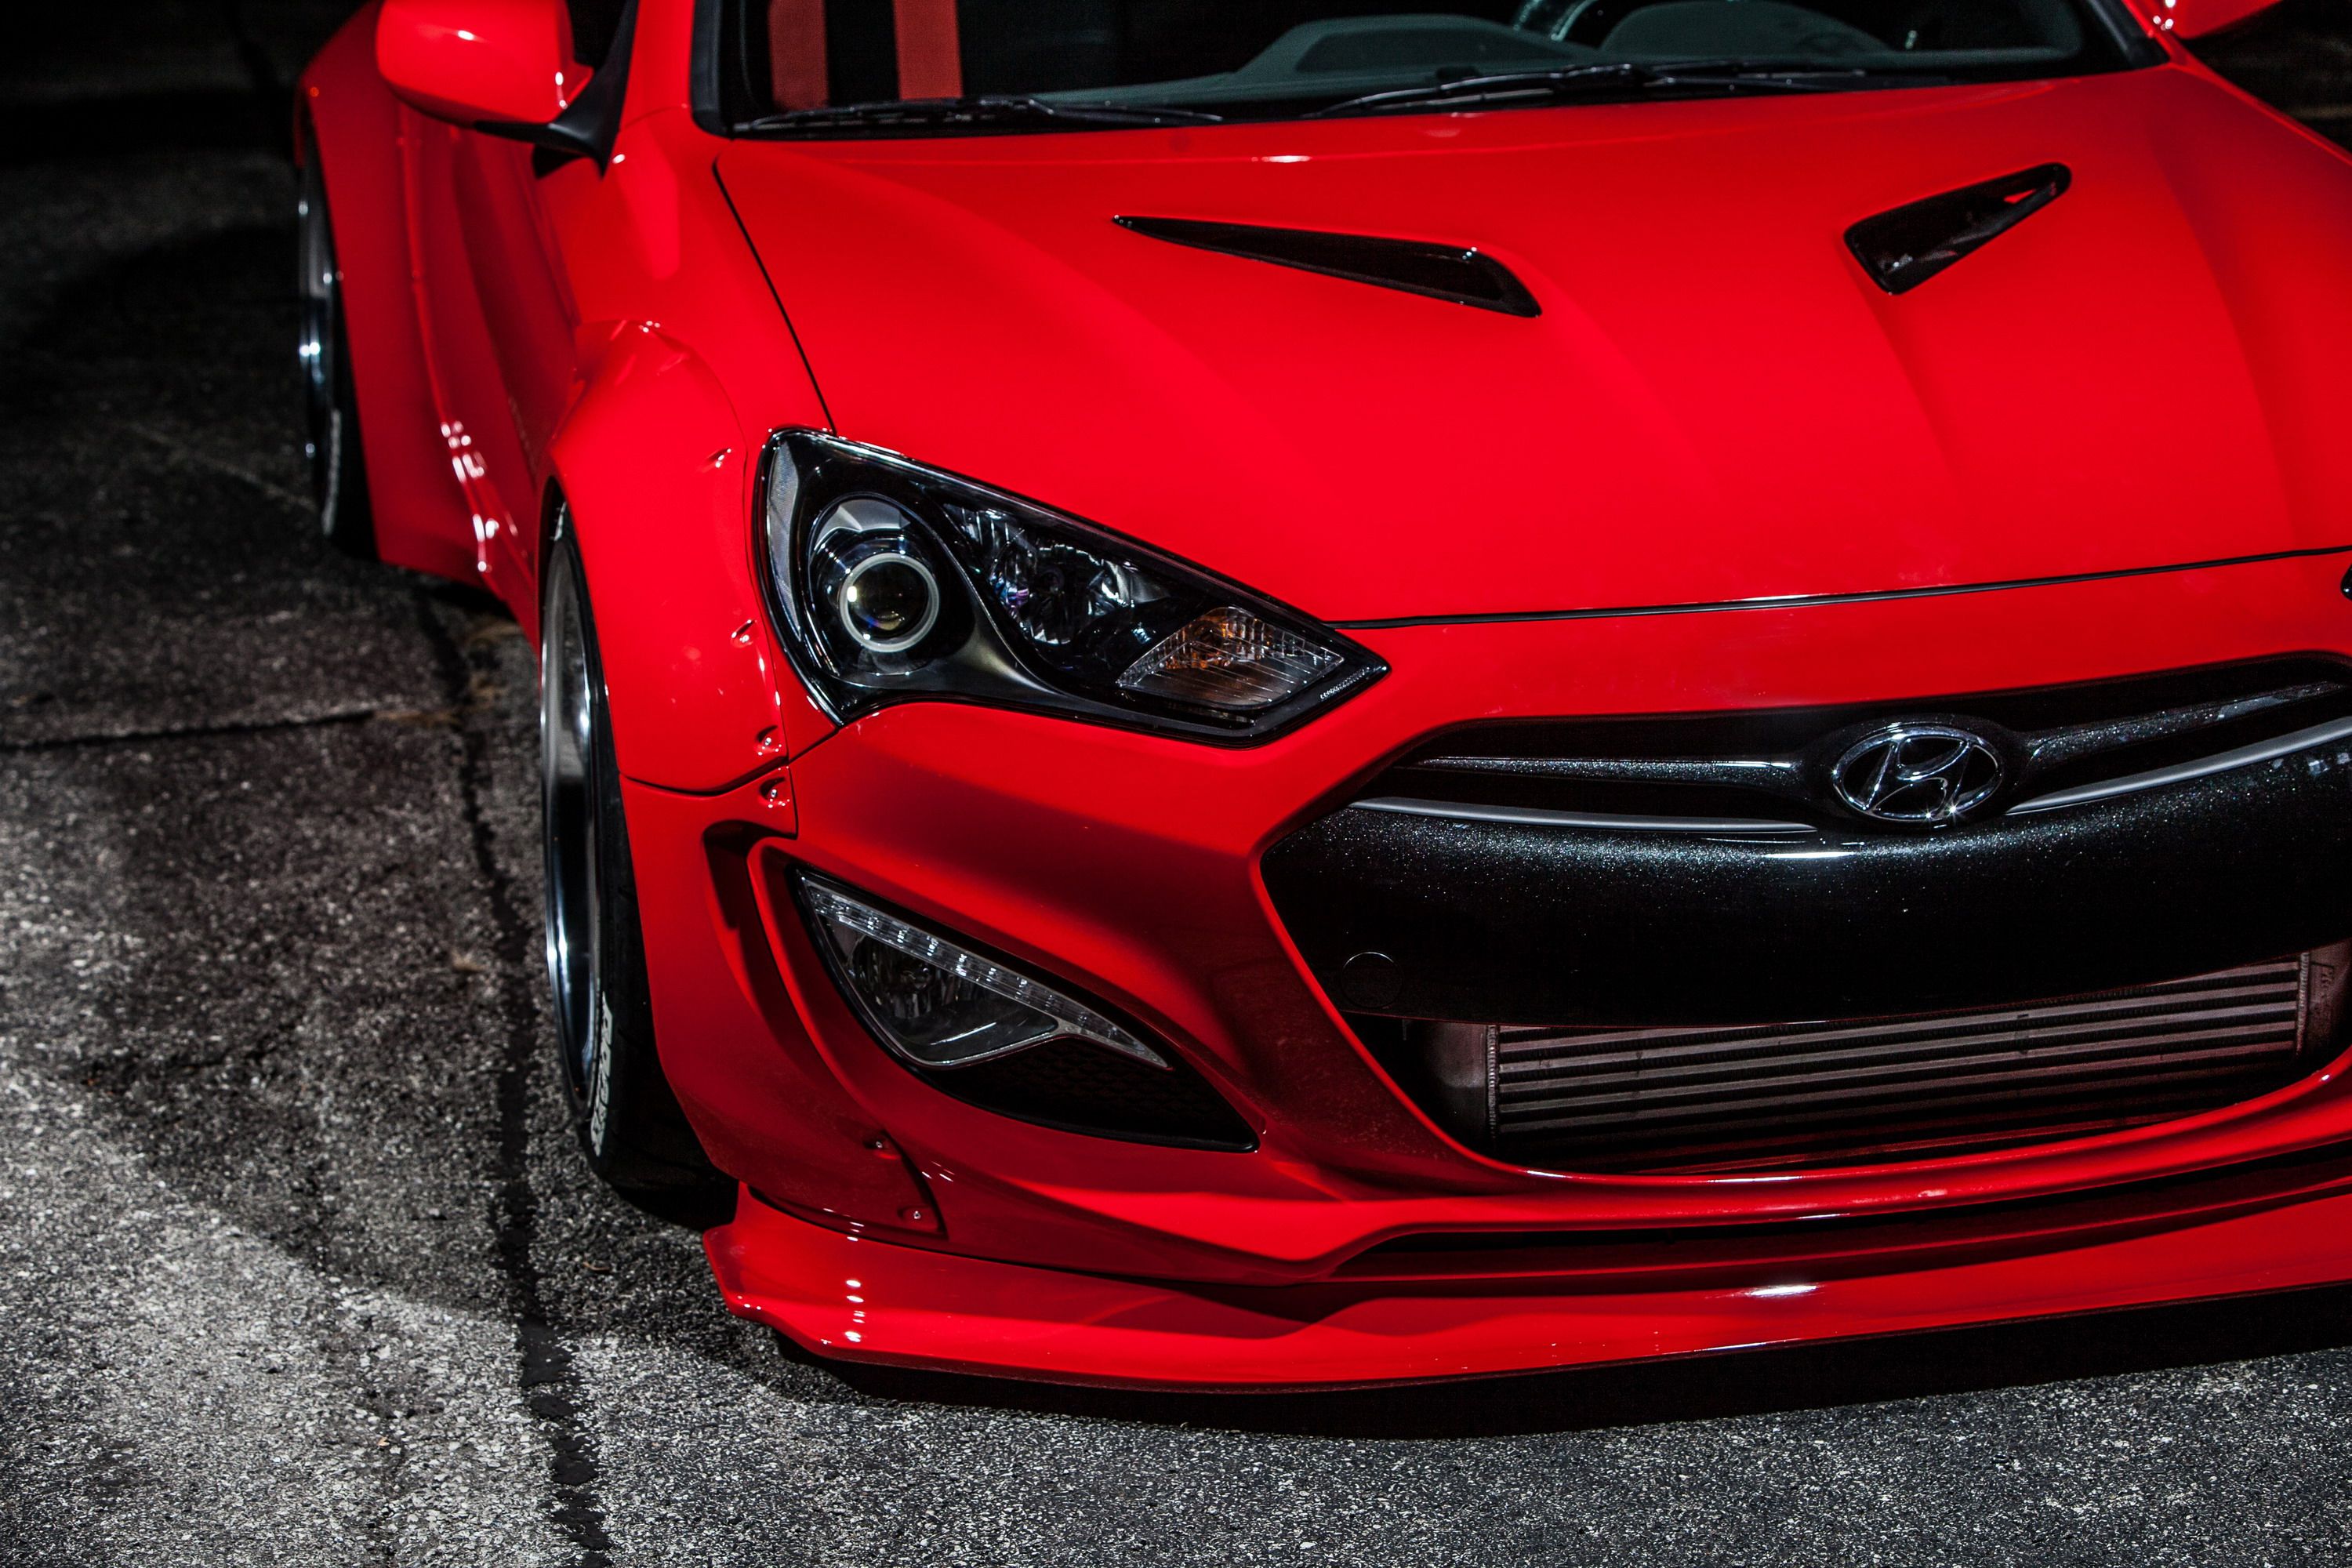 2015 Hyundai Genesis Coupe By Blood Type Racing